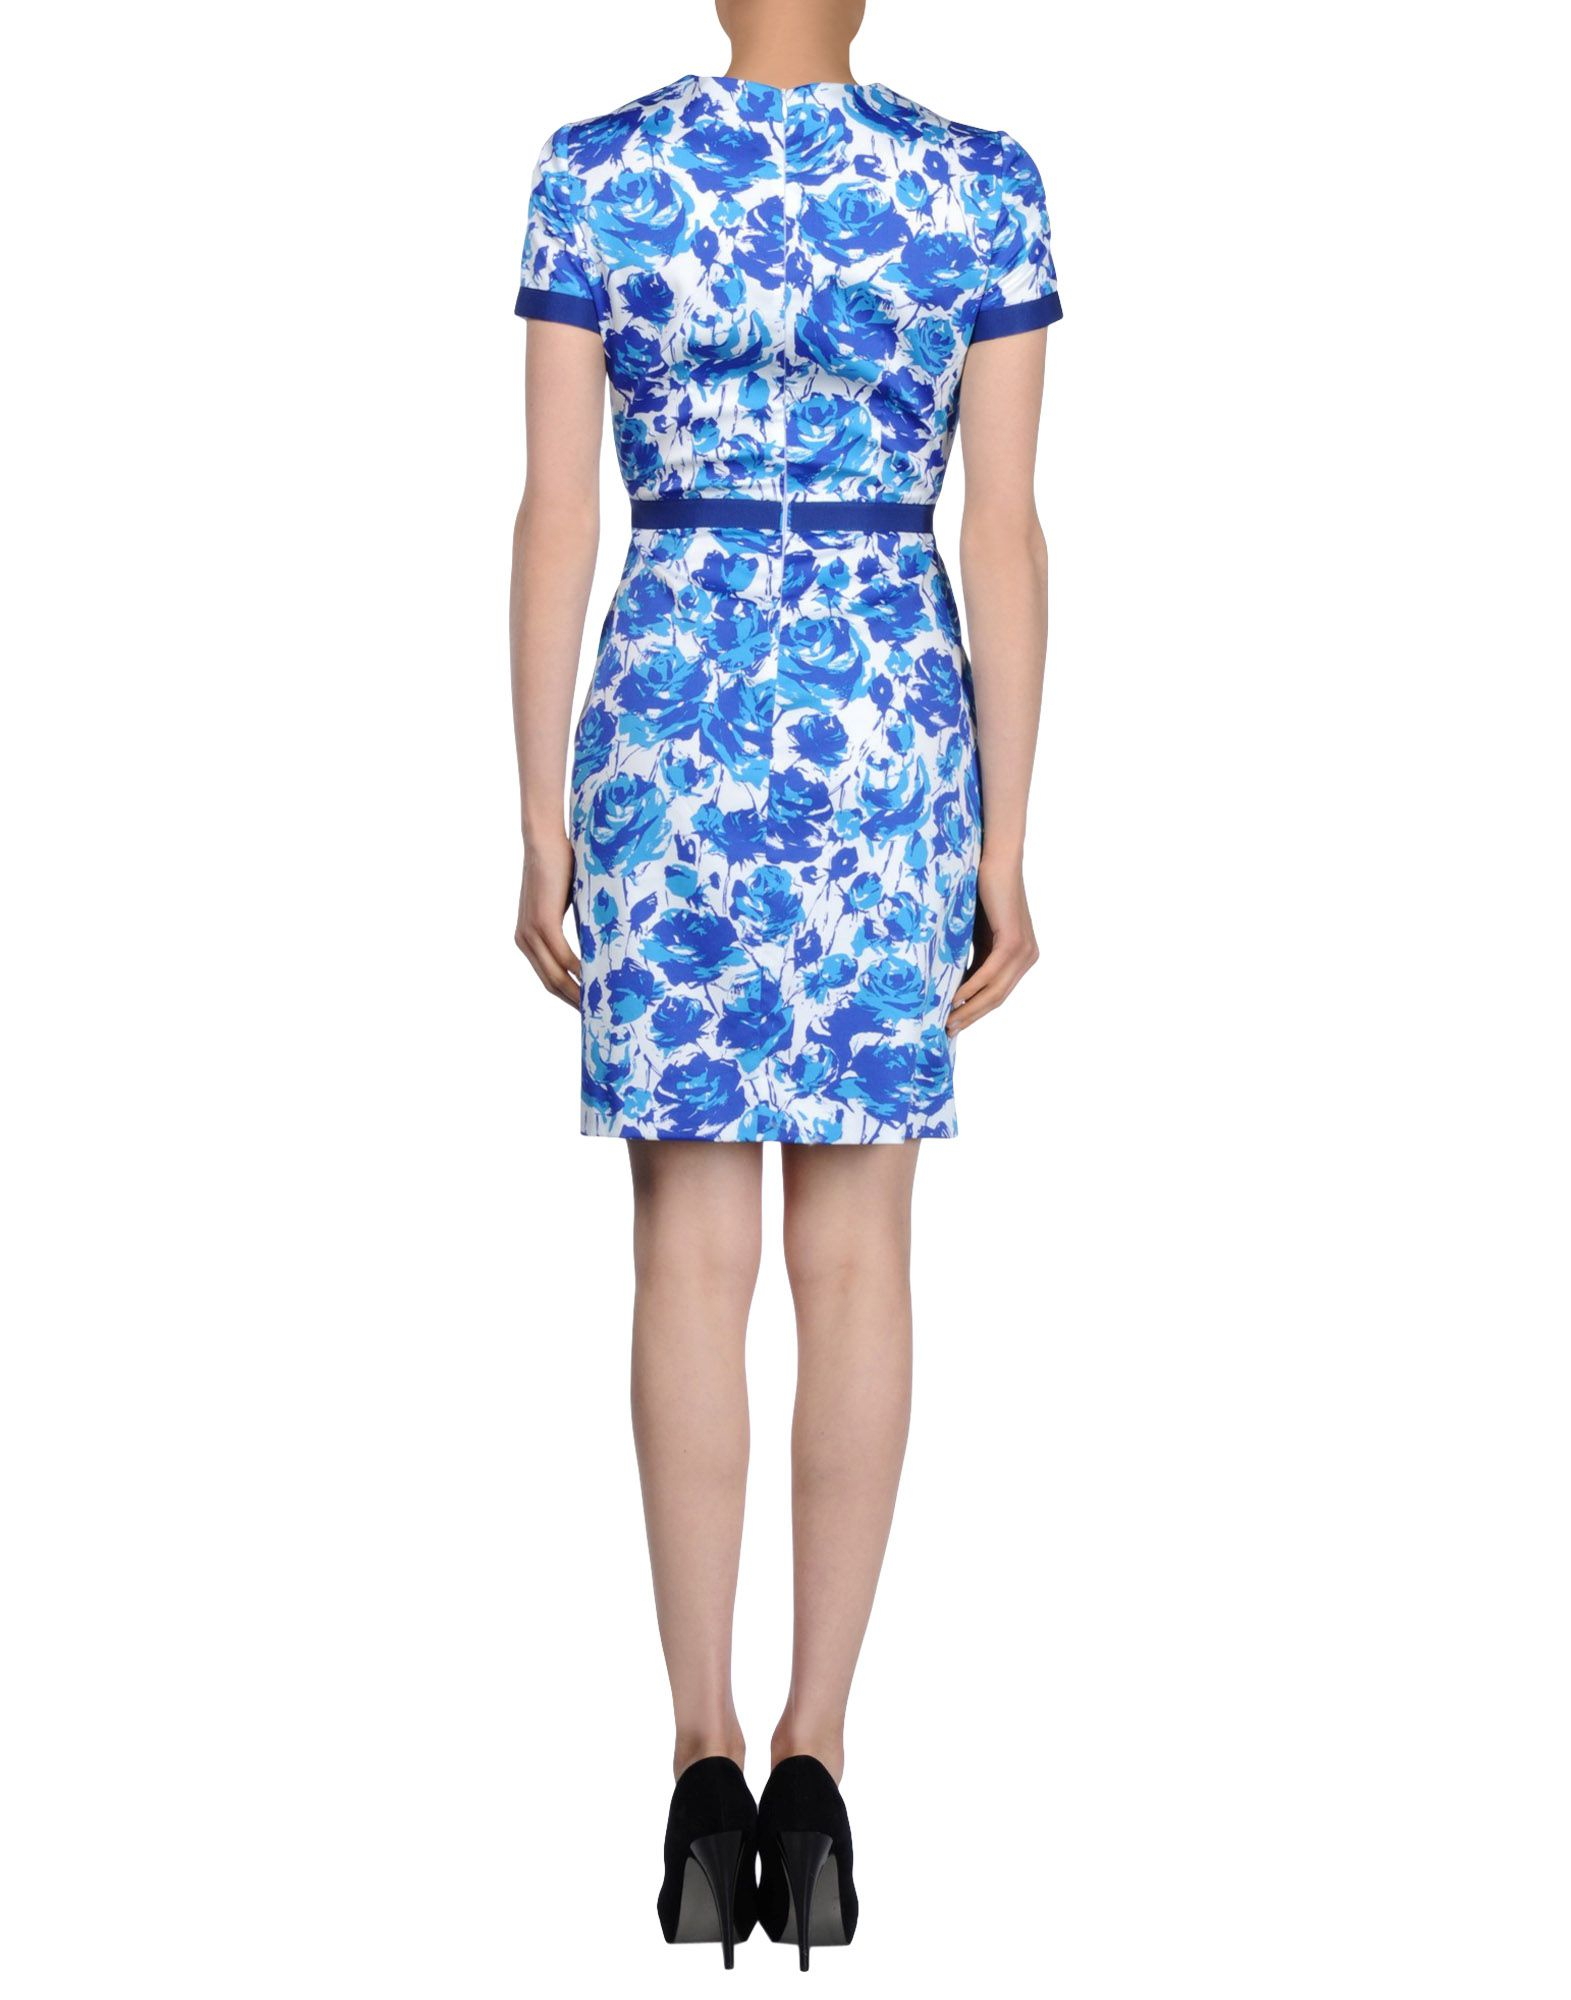 Lyst - Blugirl Blumarine Short Dress in Blue